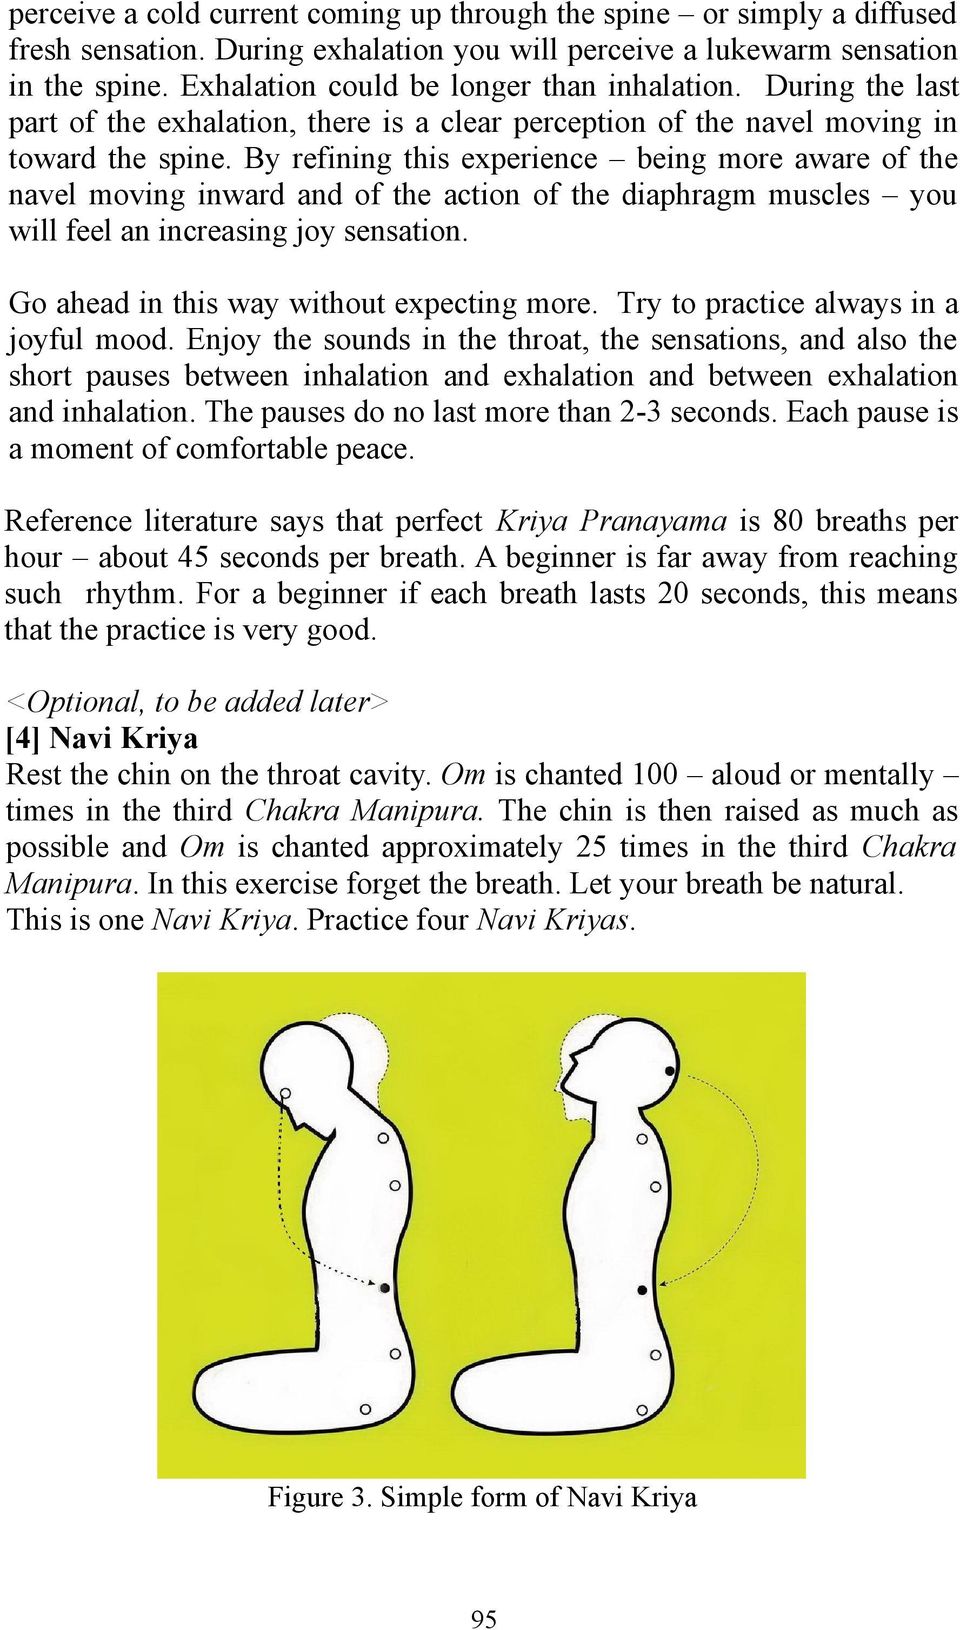 Kriya yoga of babaji 144 techniques pdf to jpg converter